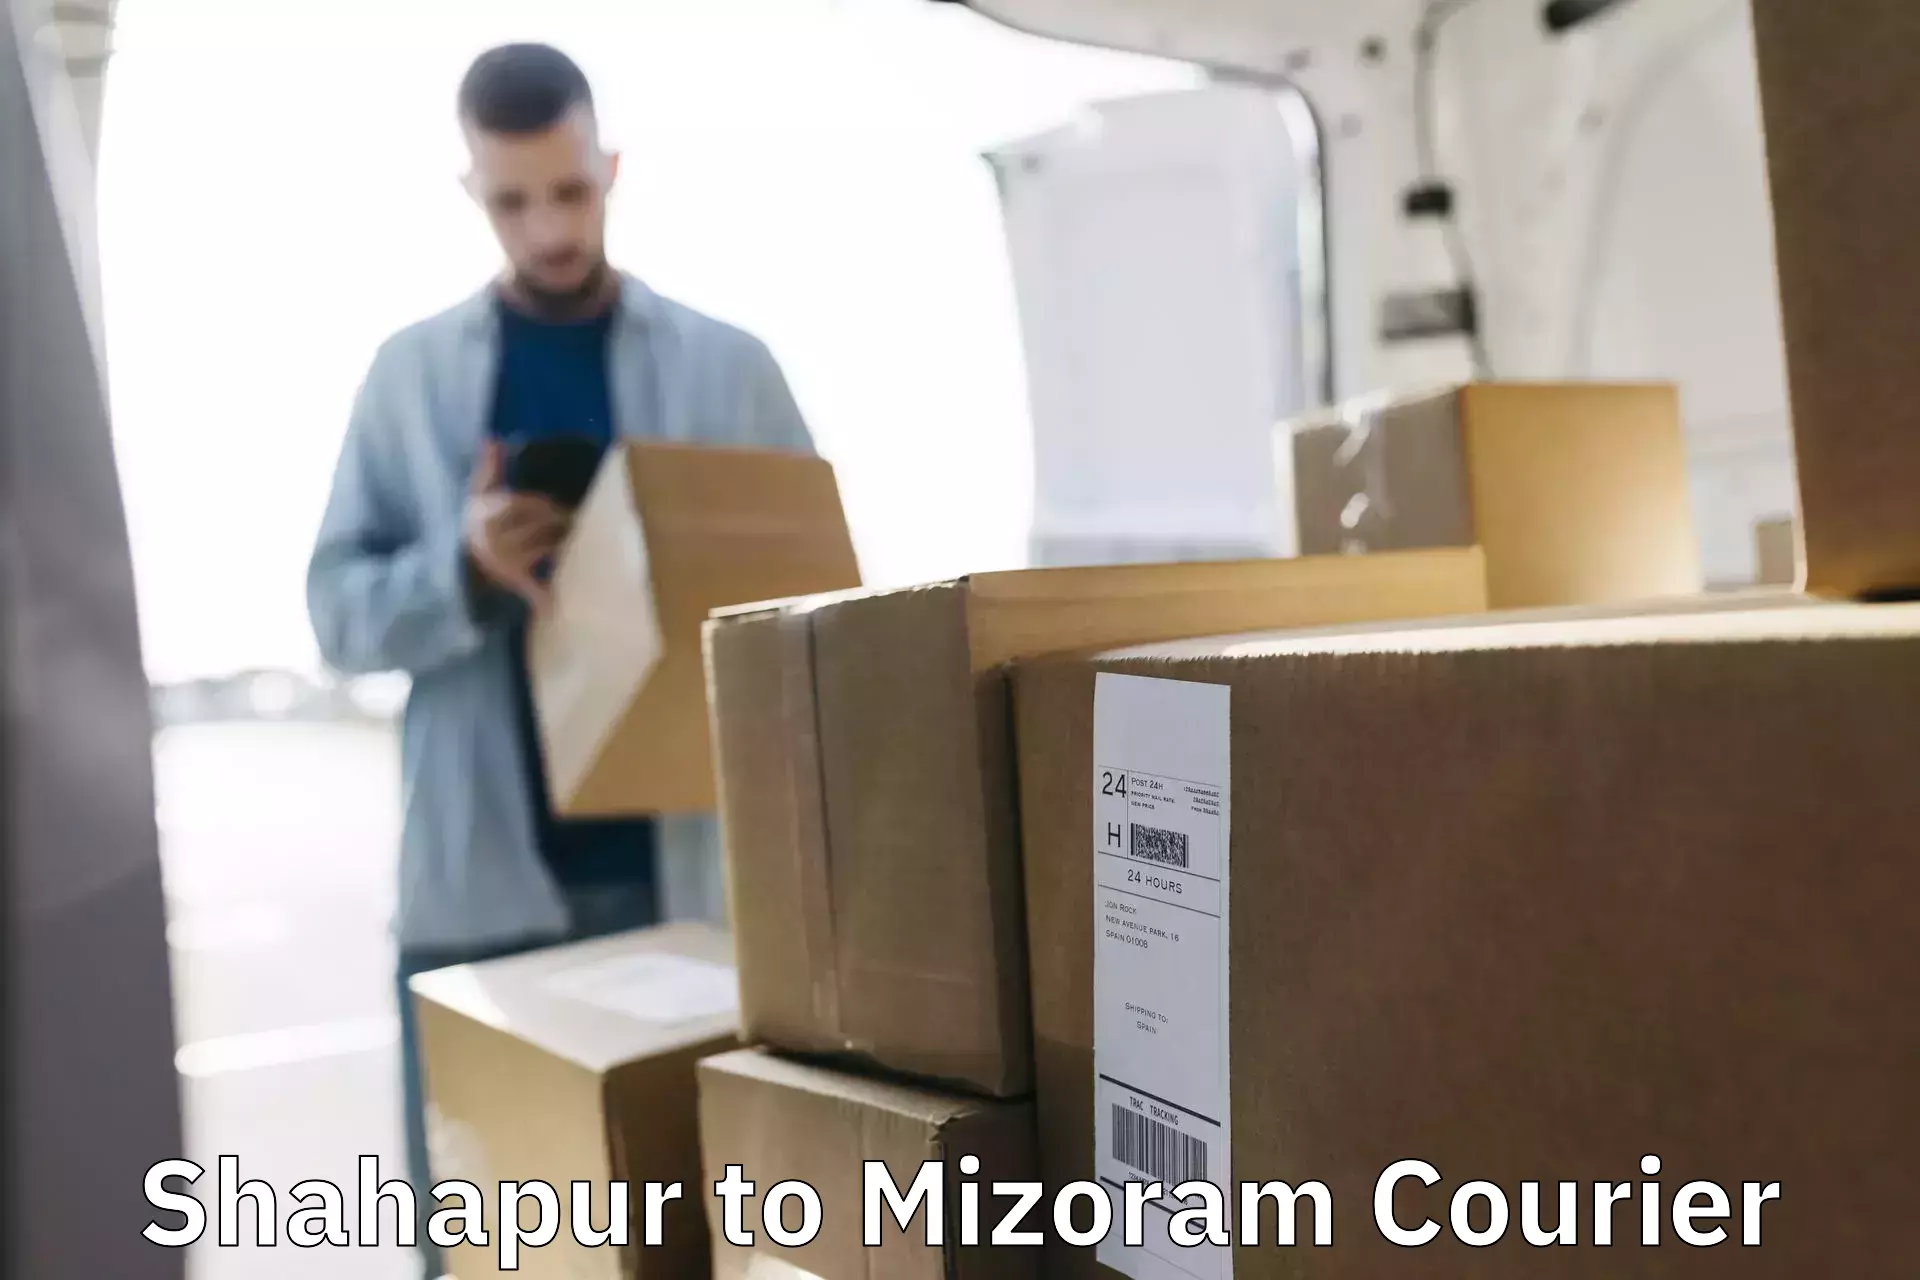 Reliable courier service Shahapur to Mizoram